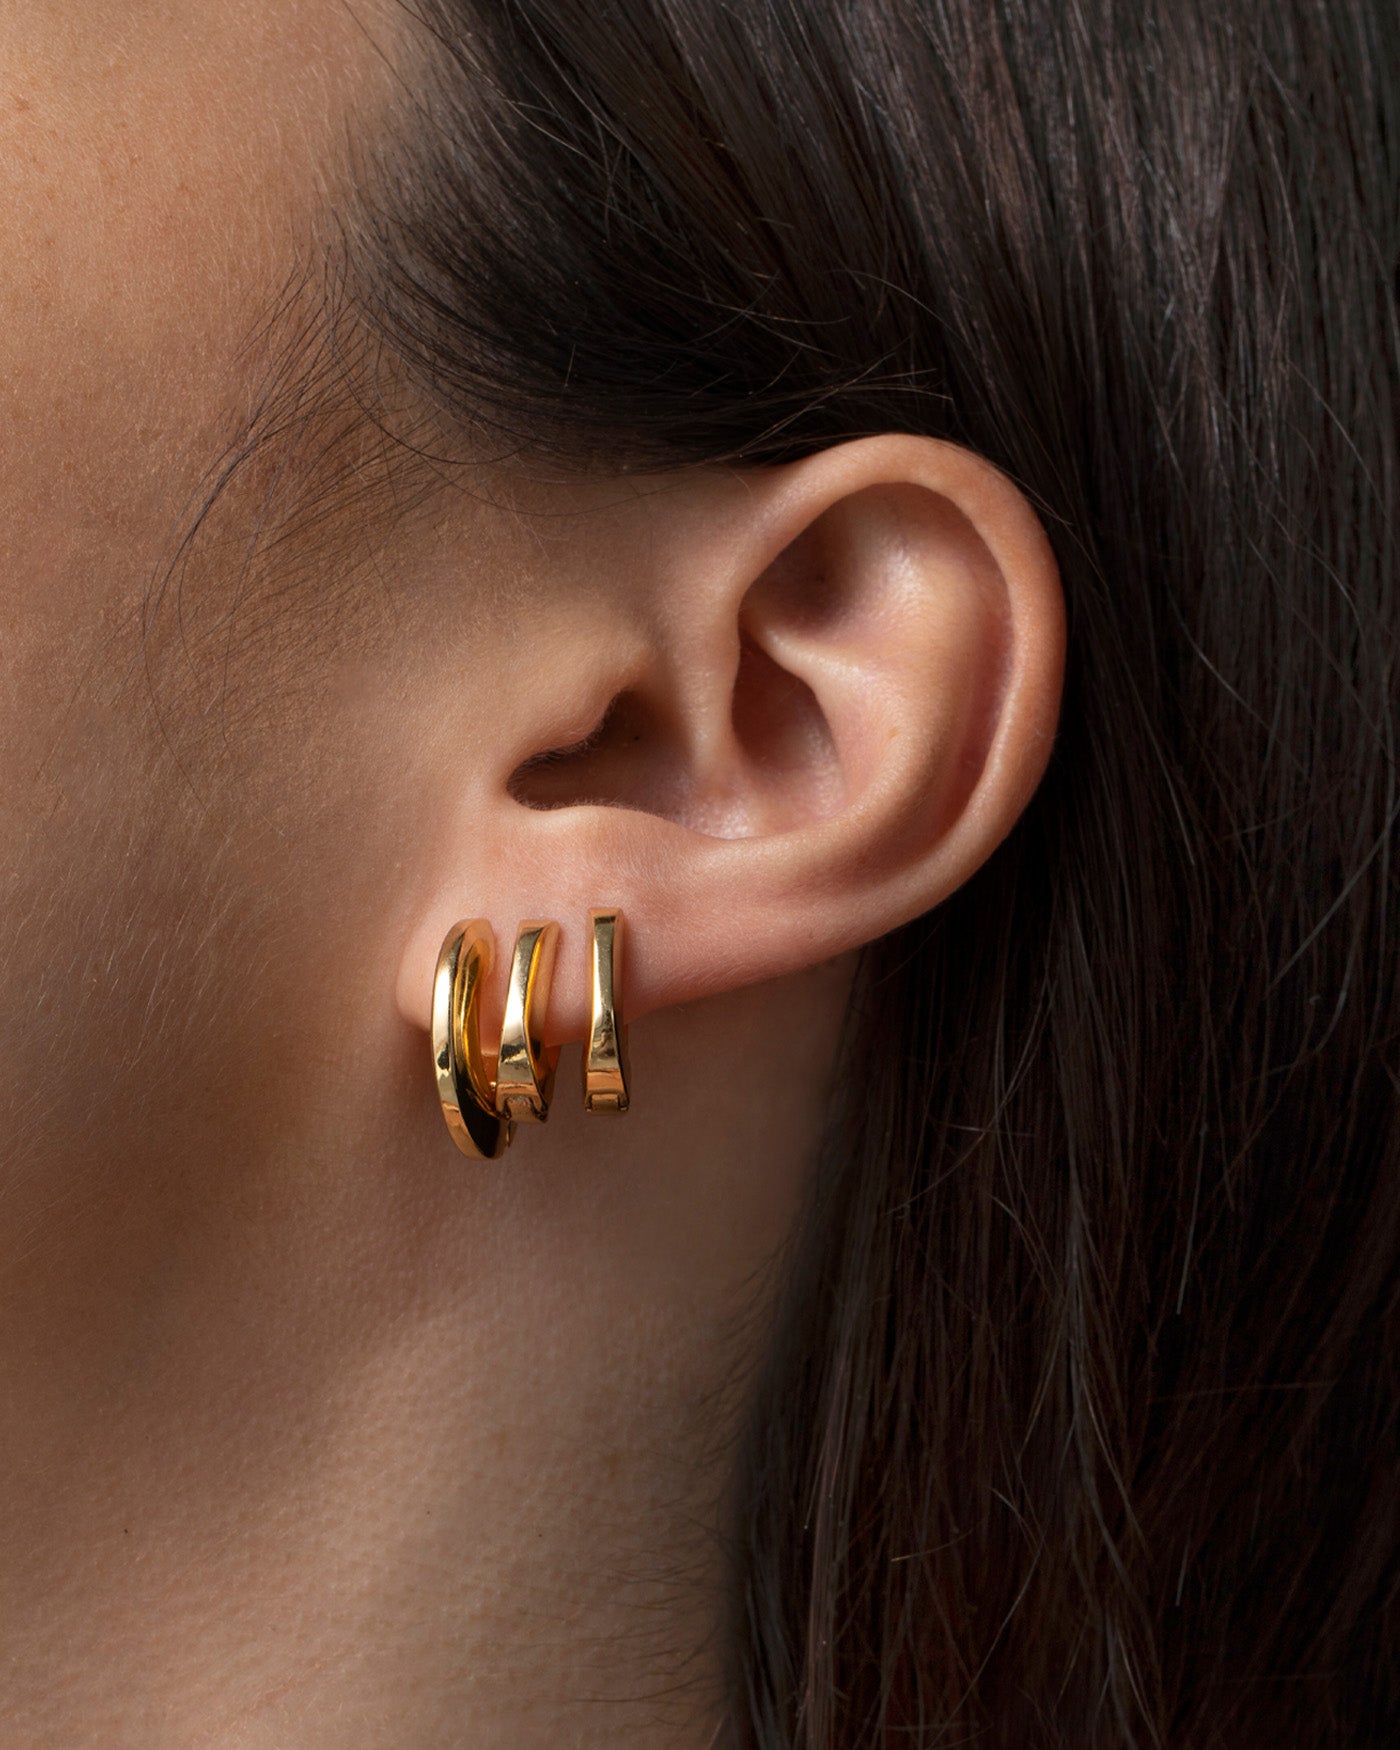 Jenni Kayne Jewelry | Jenni Kayne Small Everyday Hoop Earrings Yellow Gold | Color: Gold | Size: Os | Hercloset365's Closet